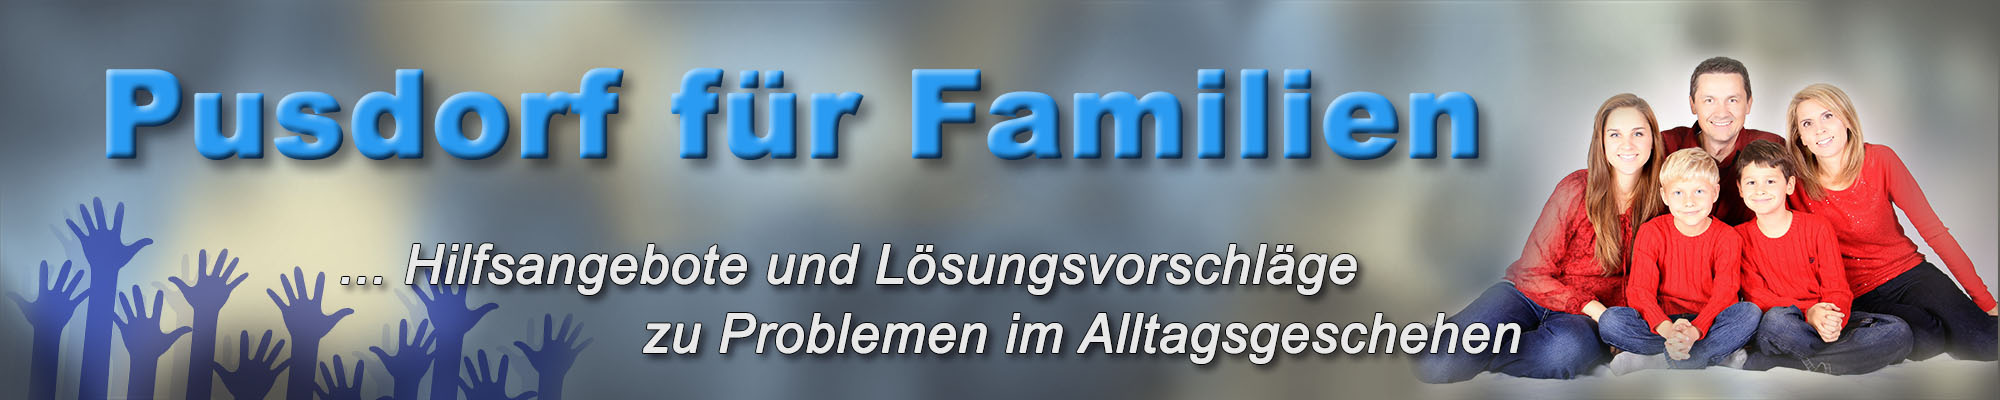 pusdorf.info – Familienwerkstatt Pusdorf